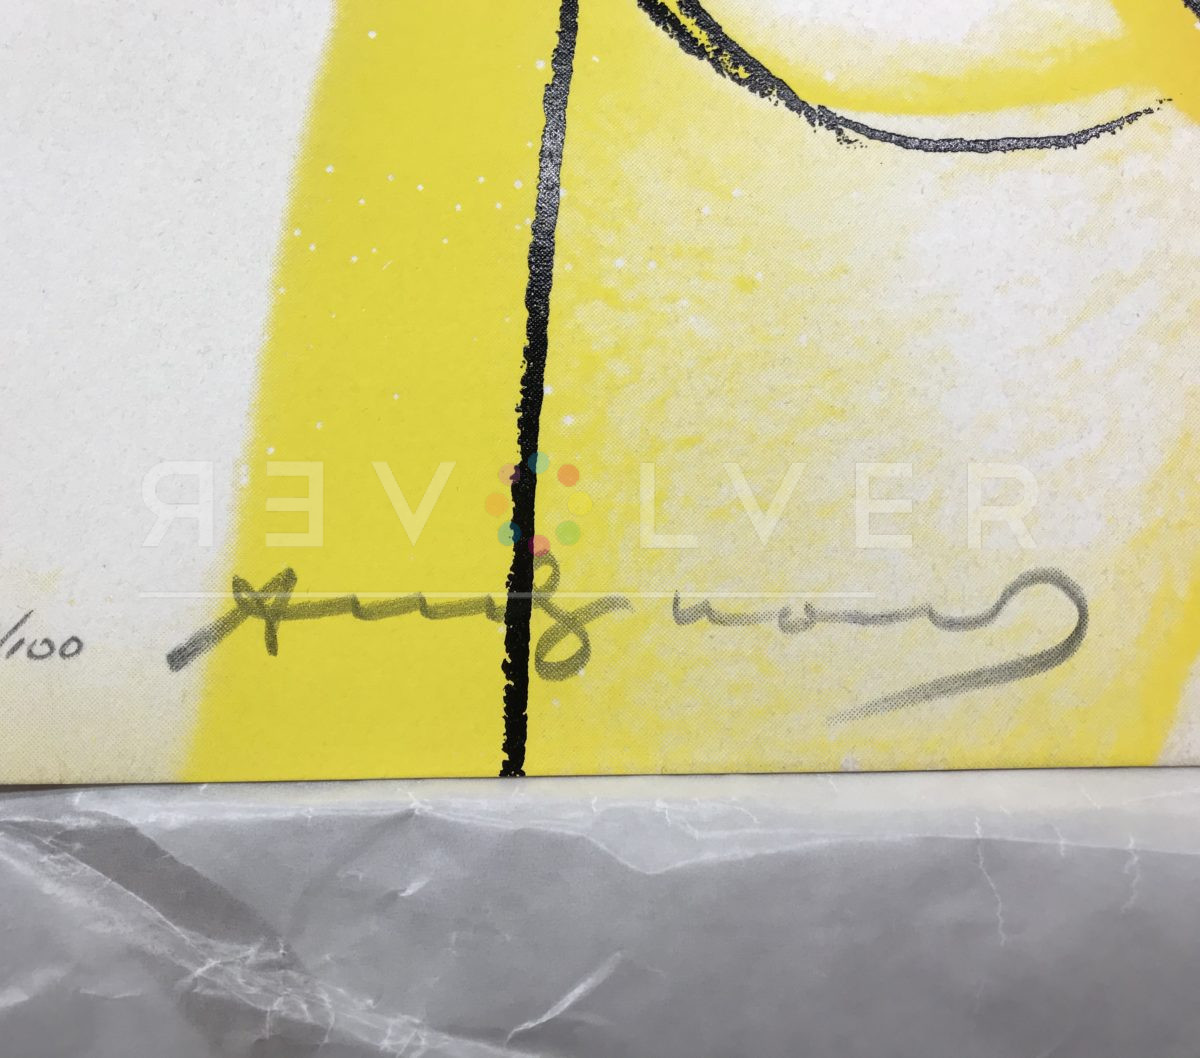 Warhol's signature on the Love 311 screen print